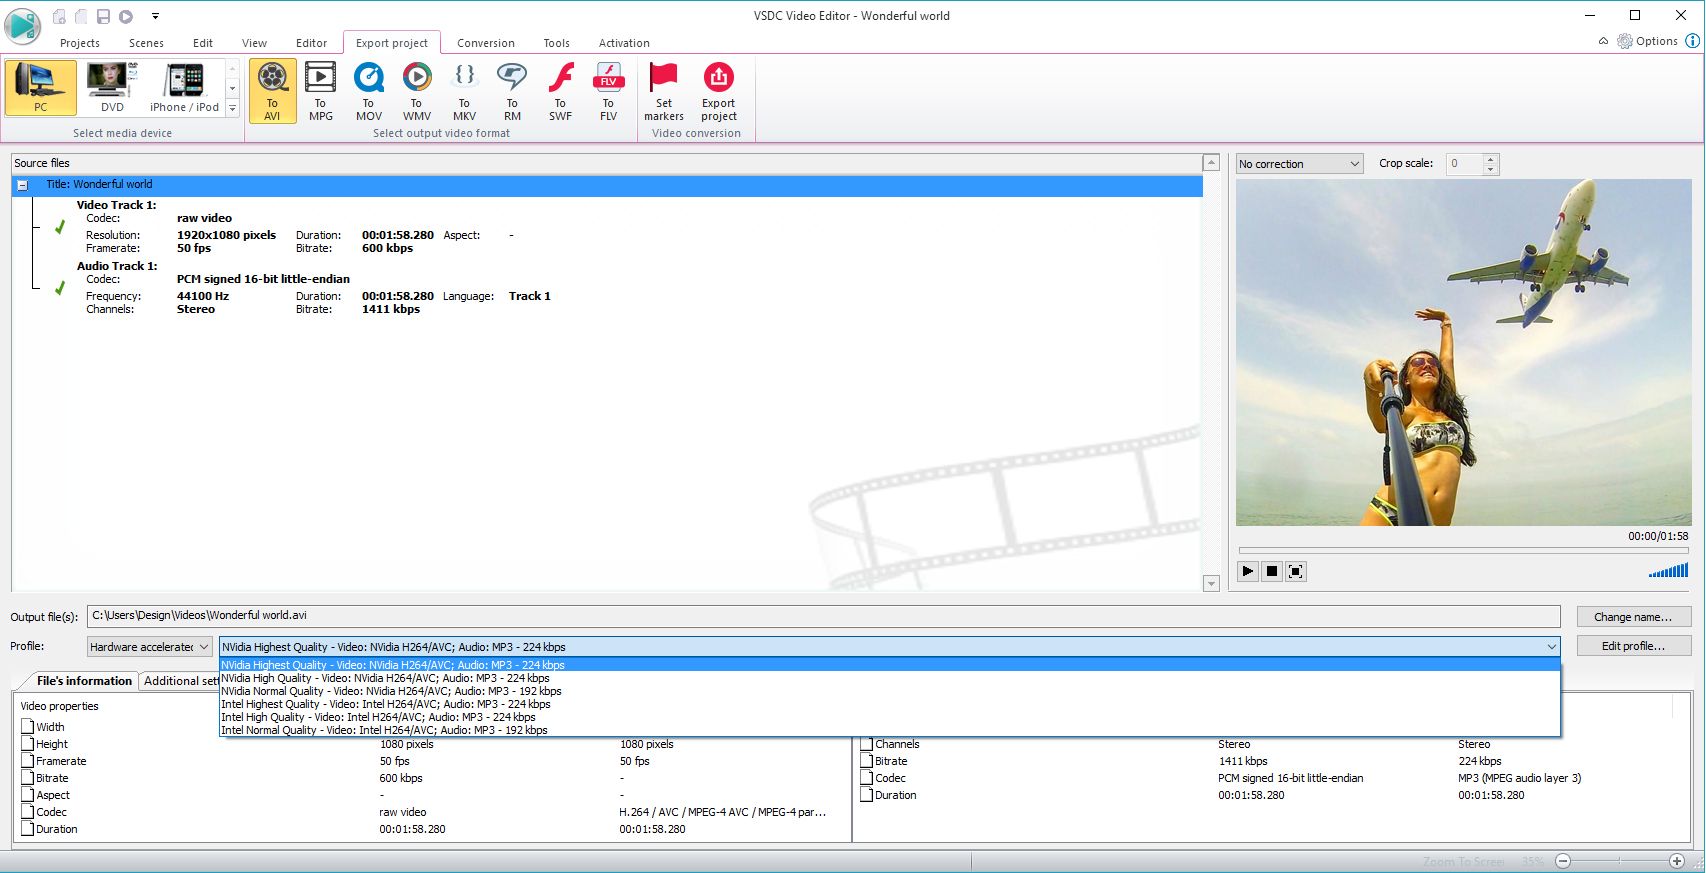 vsdc free video editor windows